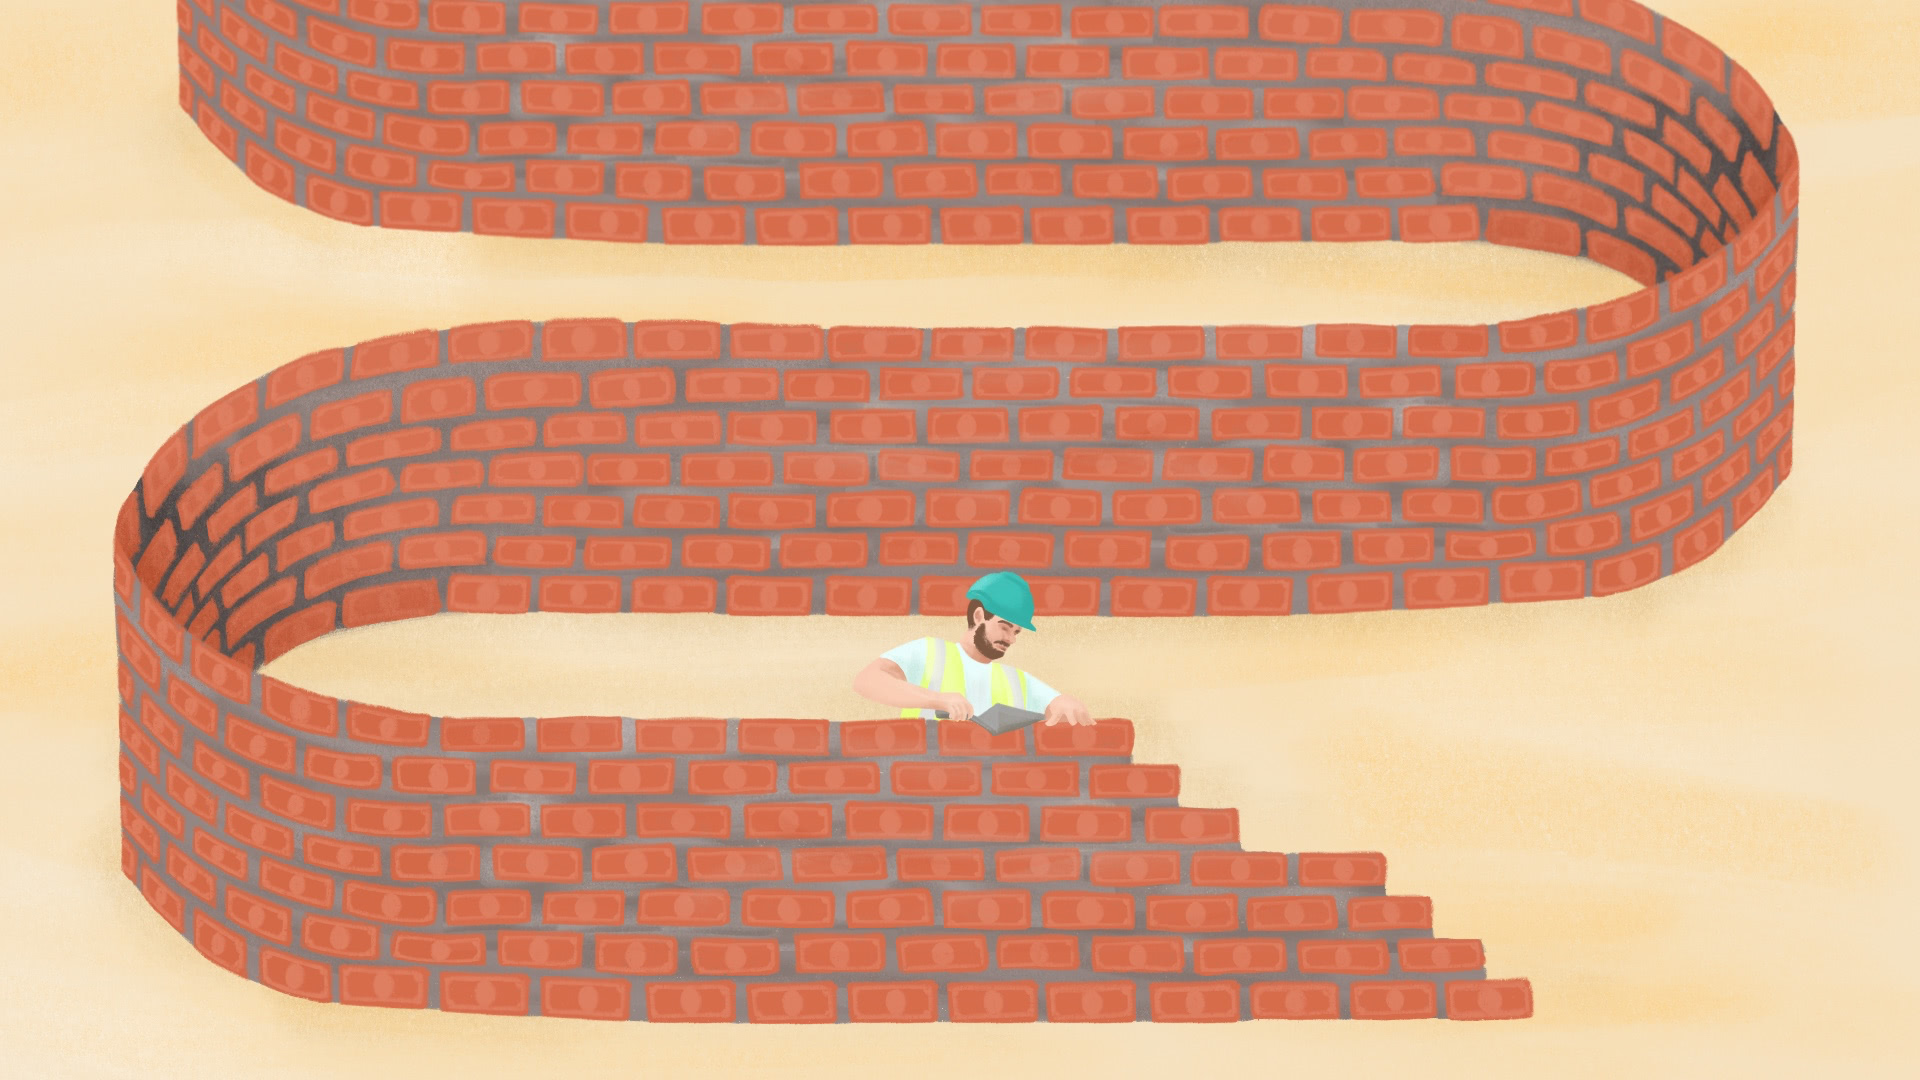 Man building brick wall. 